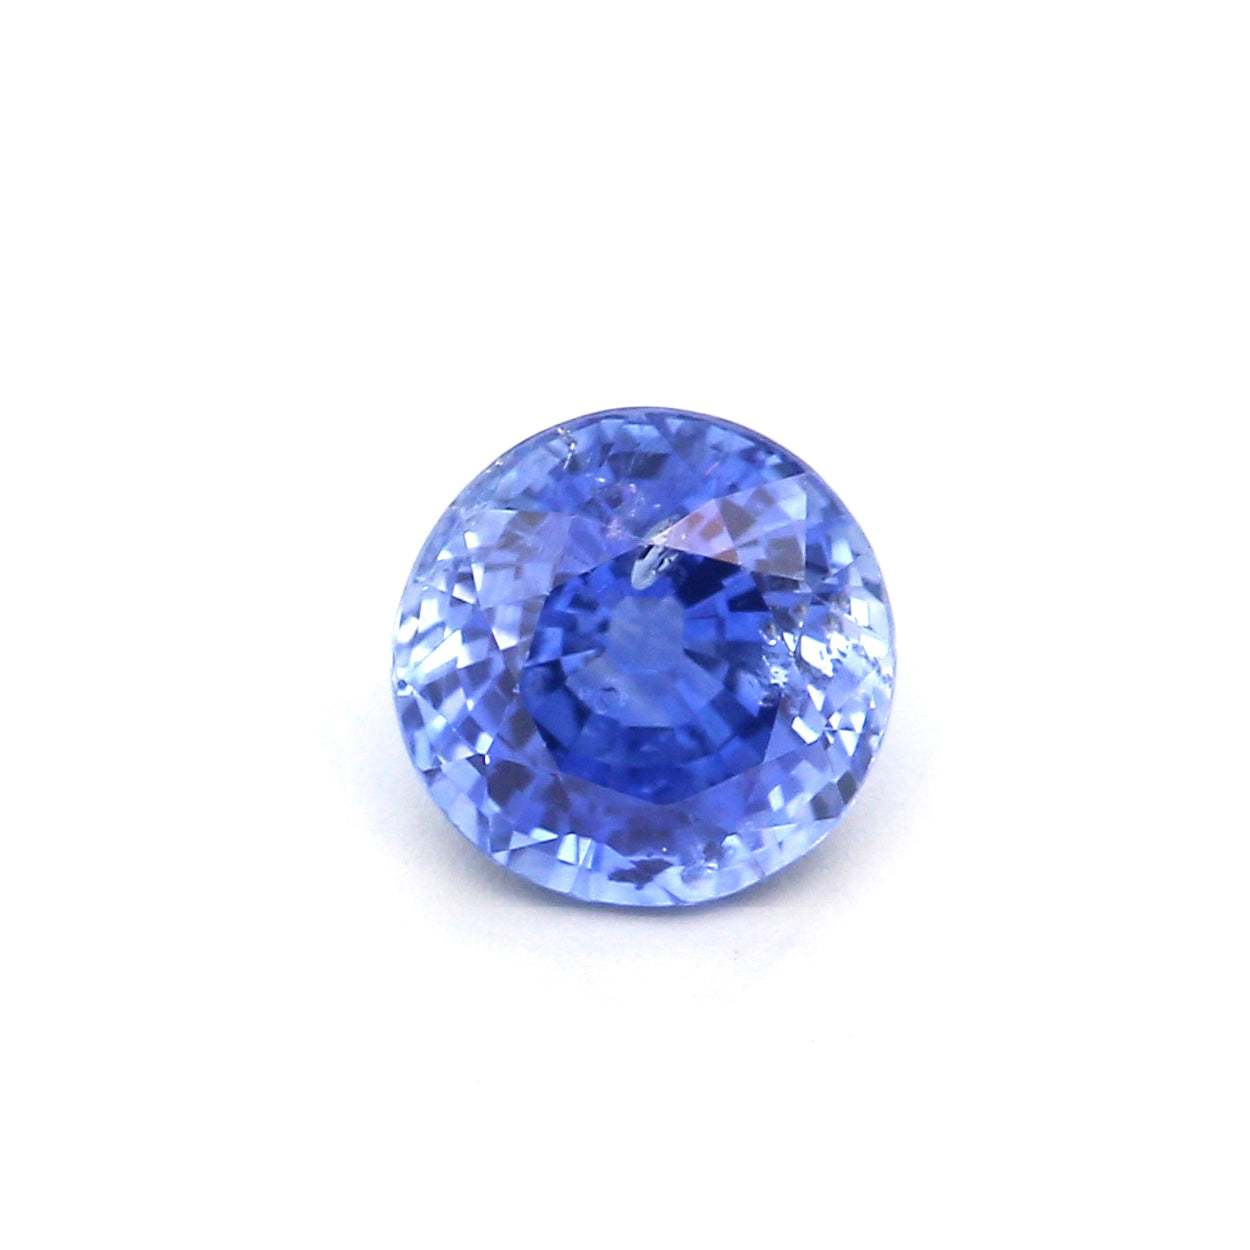 0.98ct Round Sapphire, Heated, Sri Lanka - 5.49 x 5.55 x 3.94mm